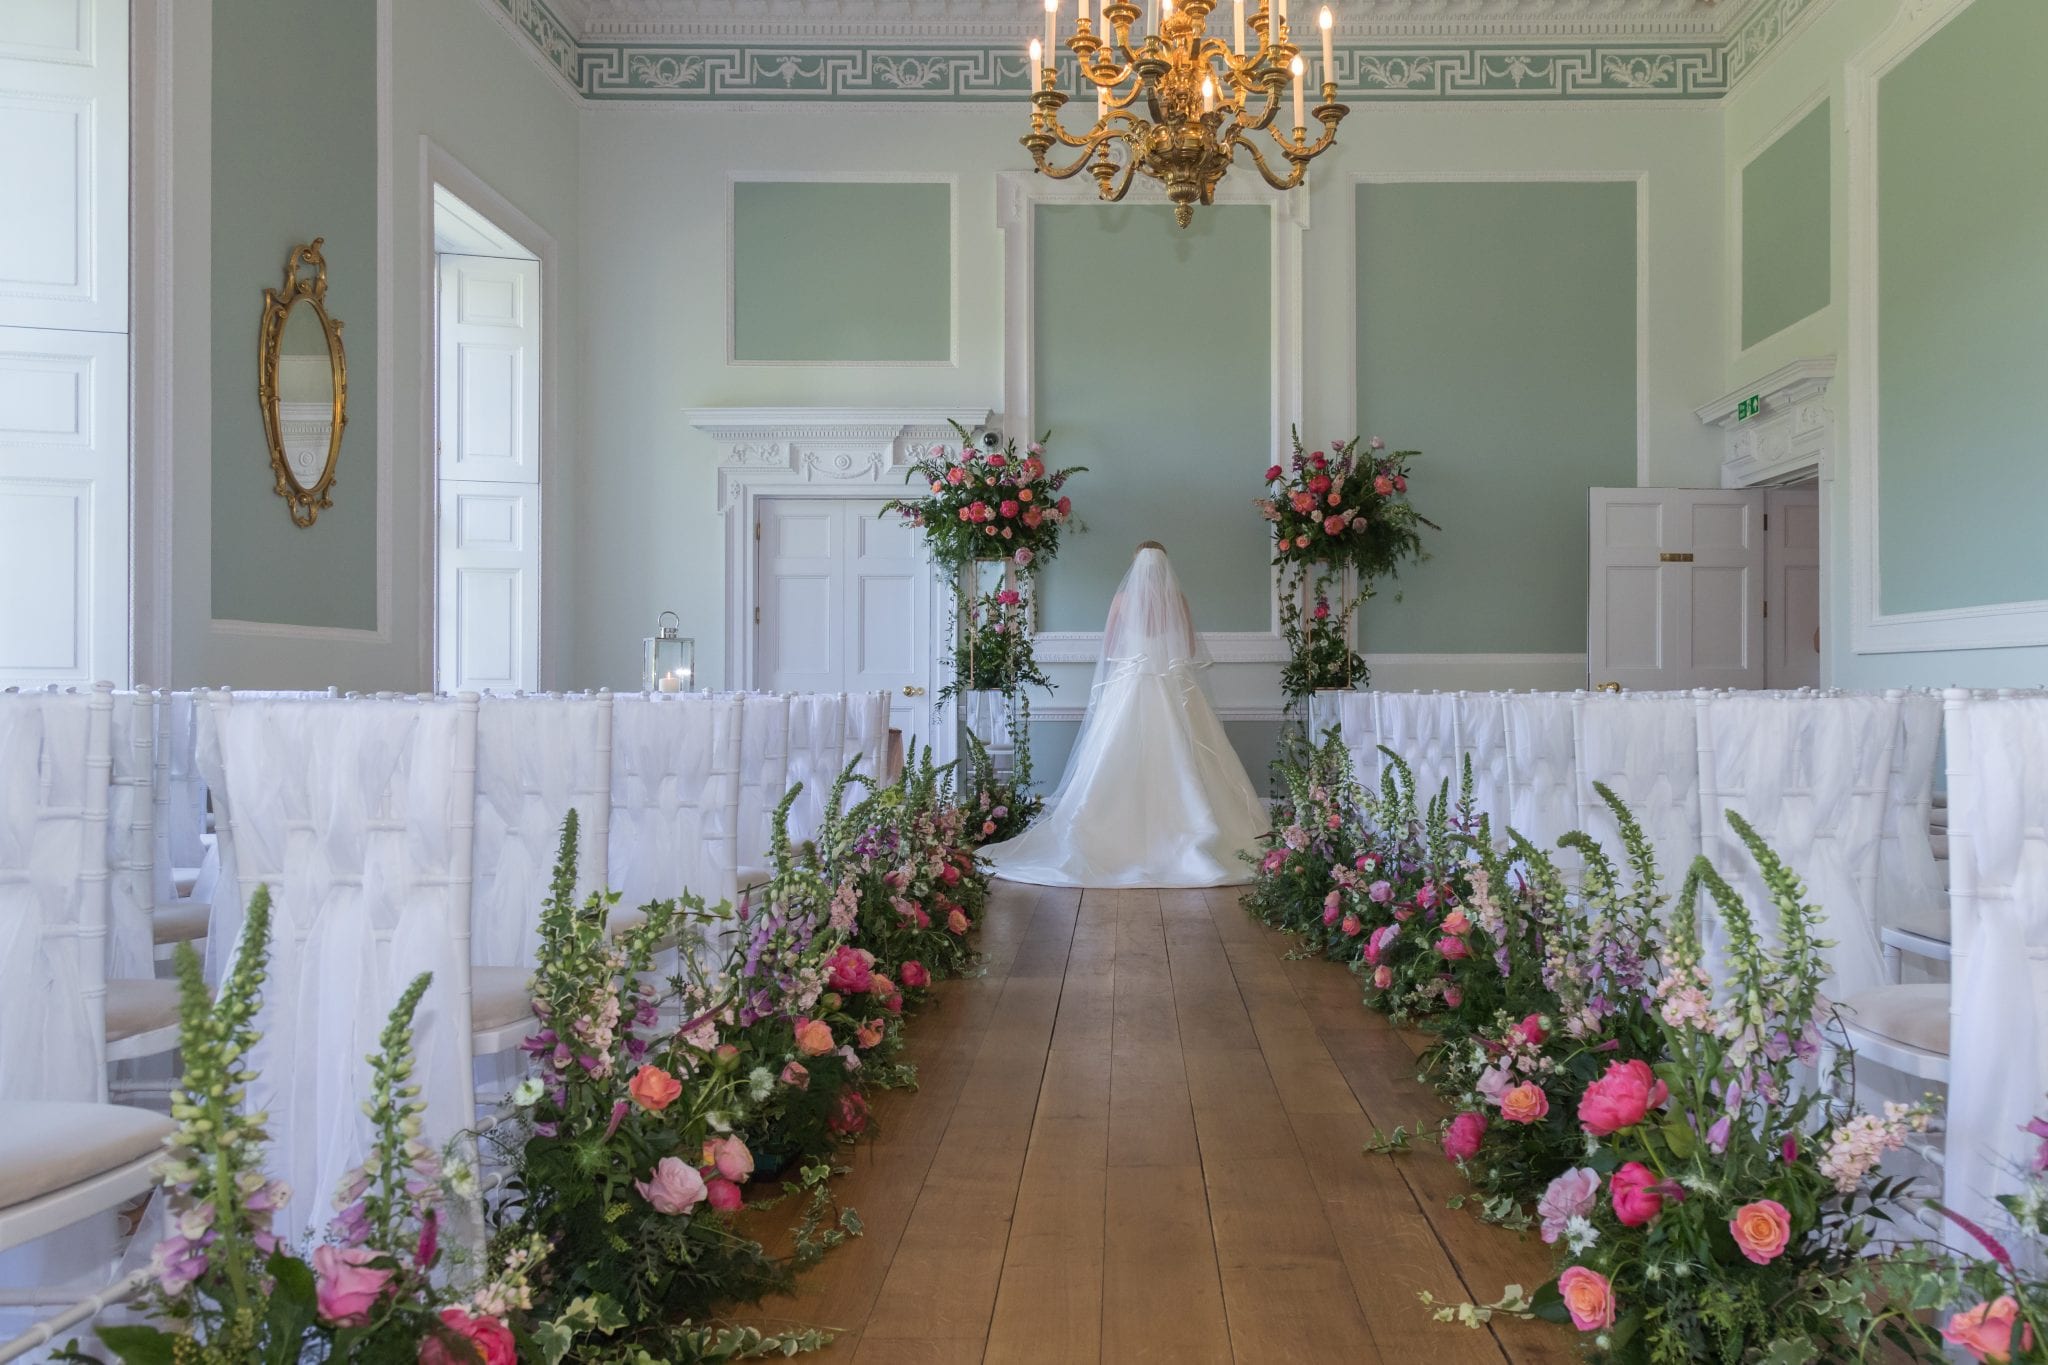 Bride Green Room civil ceremony floral displays